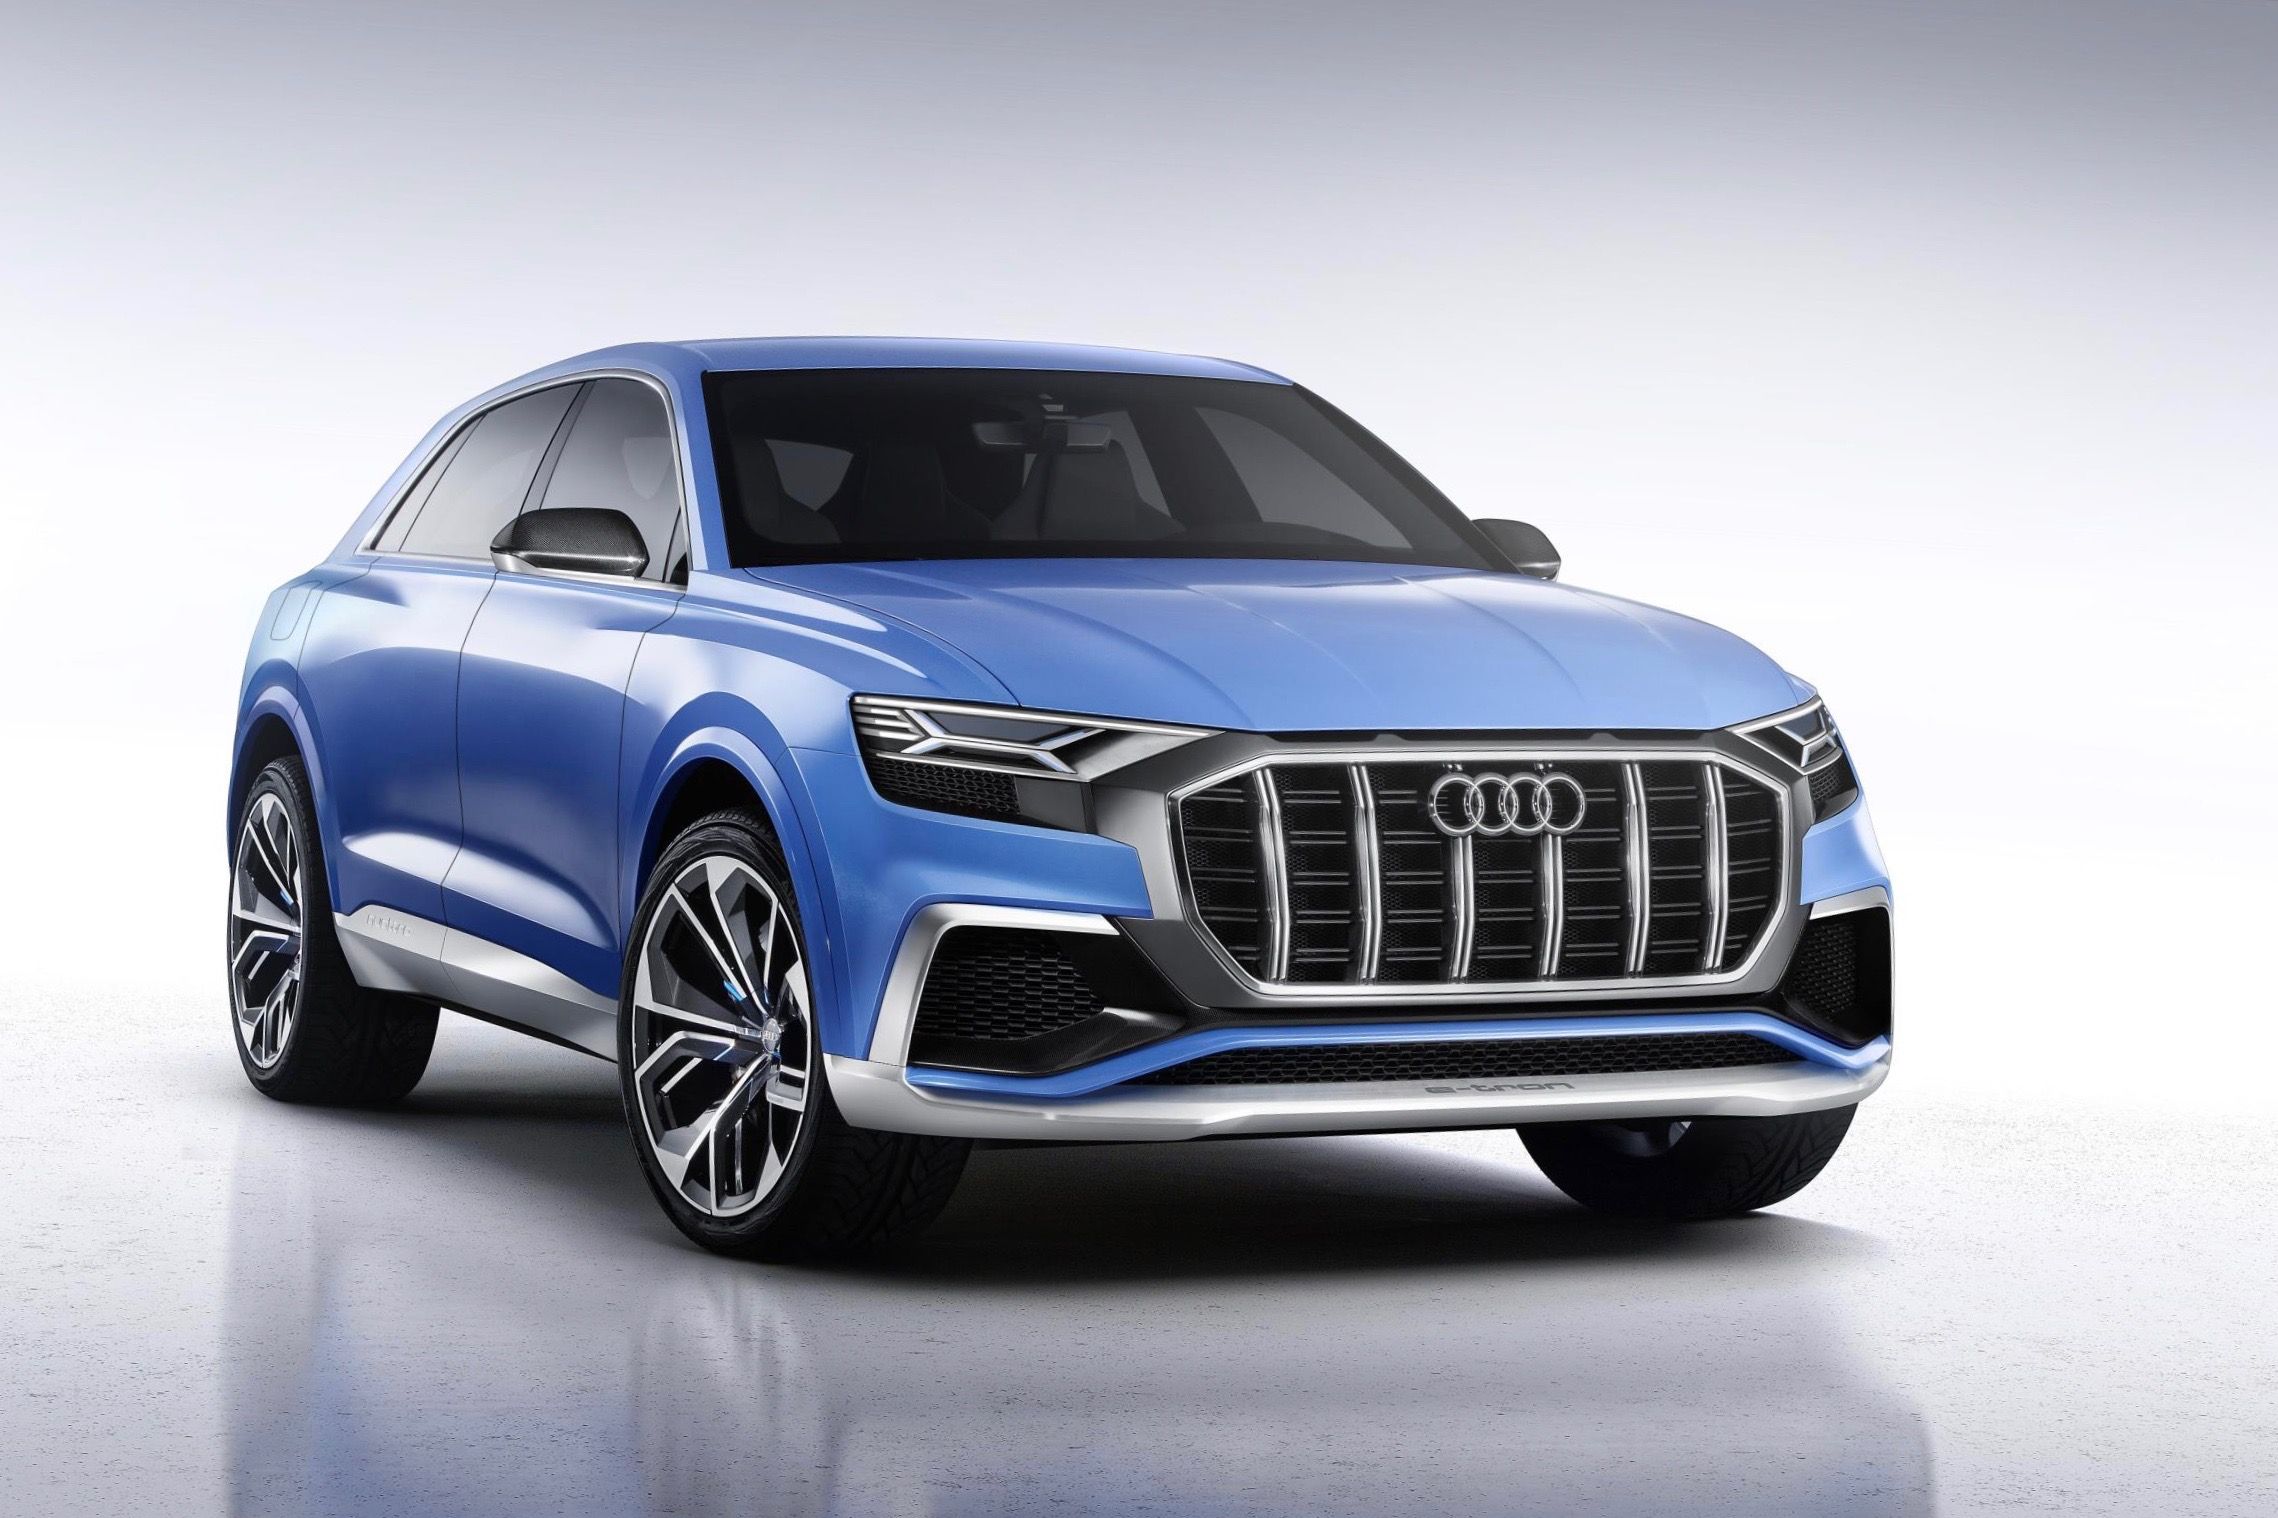 Audi reveals hybrid SUV Q8 for 2018